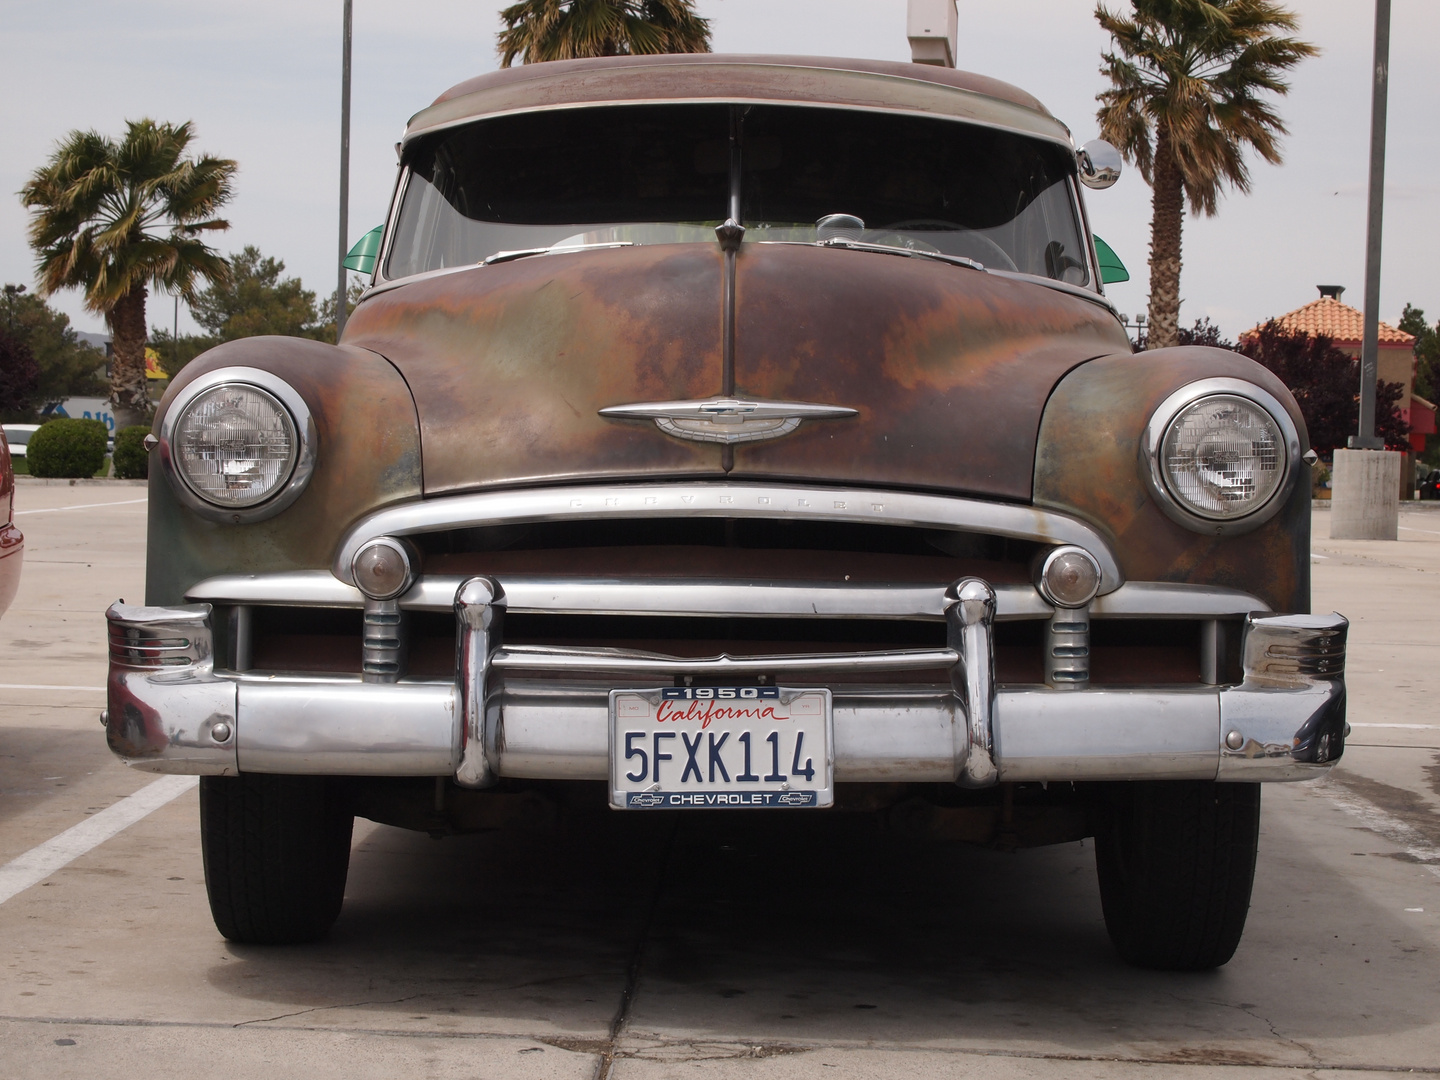 old Chevrolet / California / Olympus E-PL1